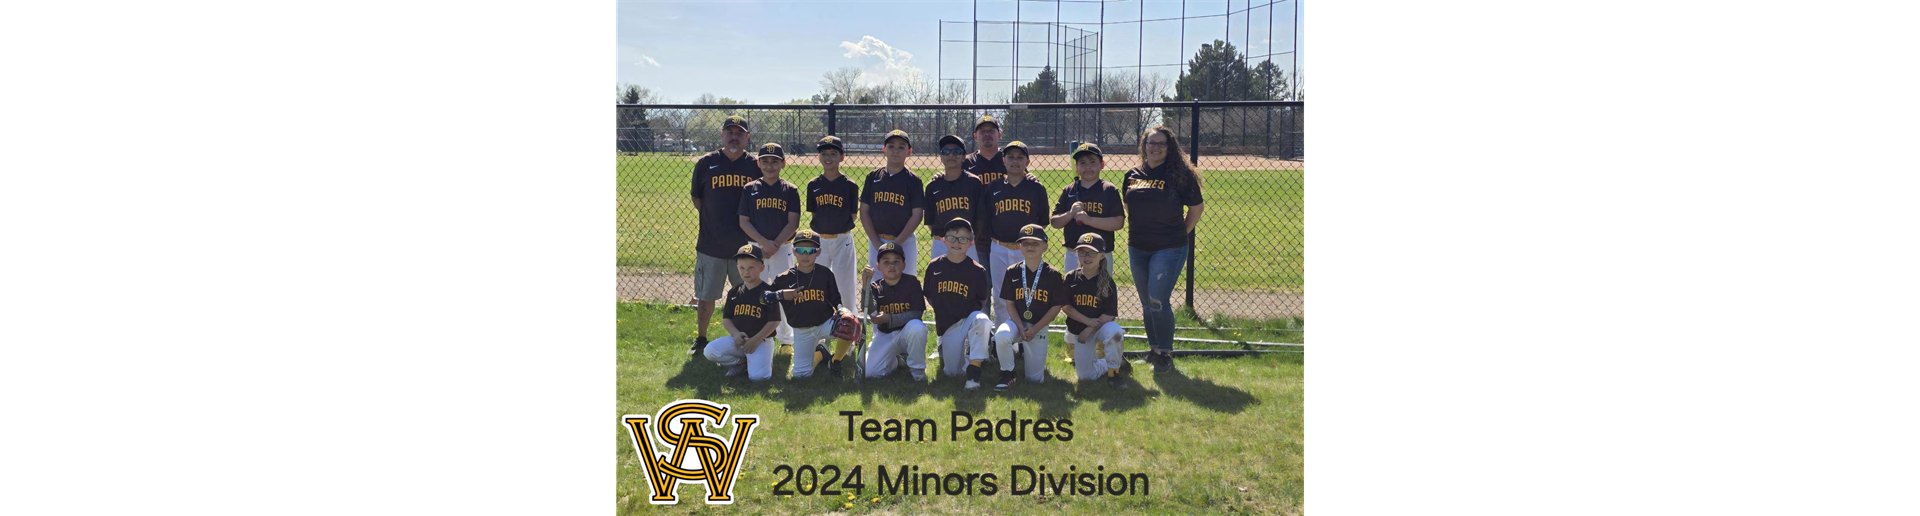 Padres Team 